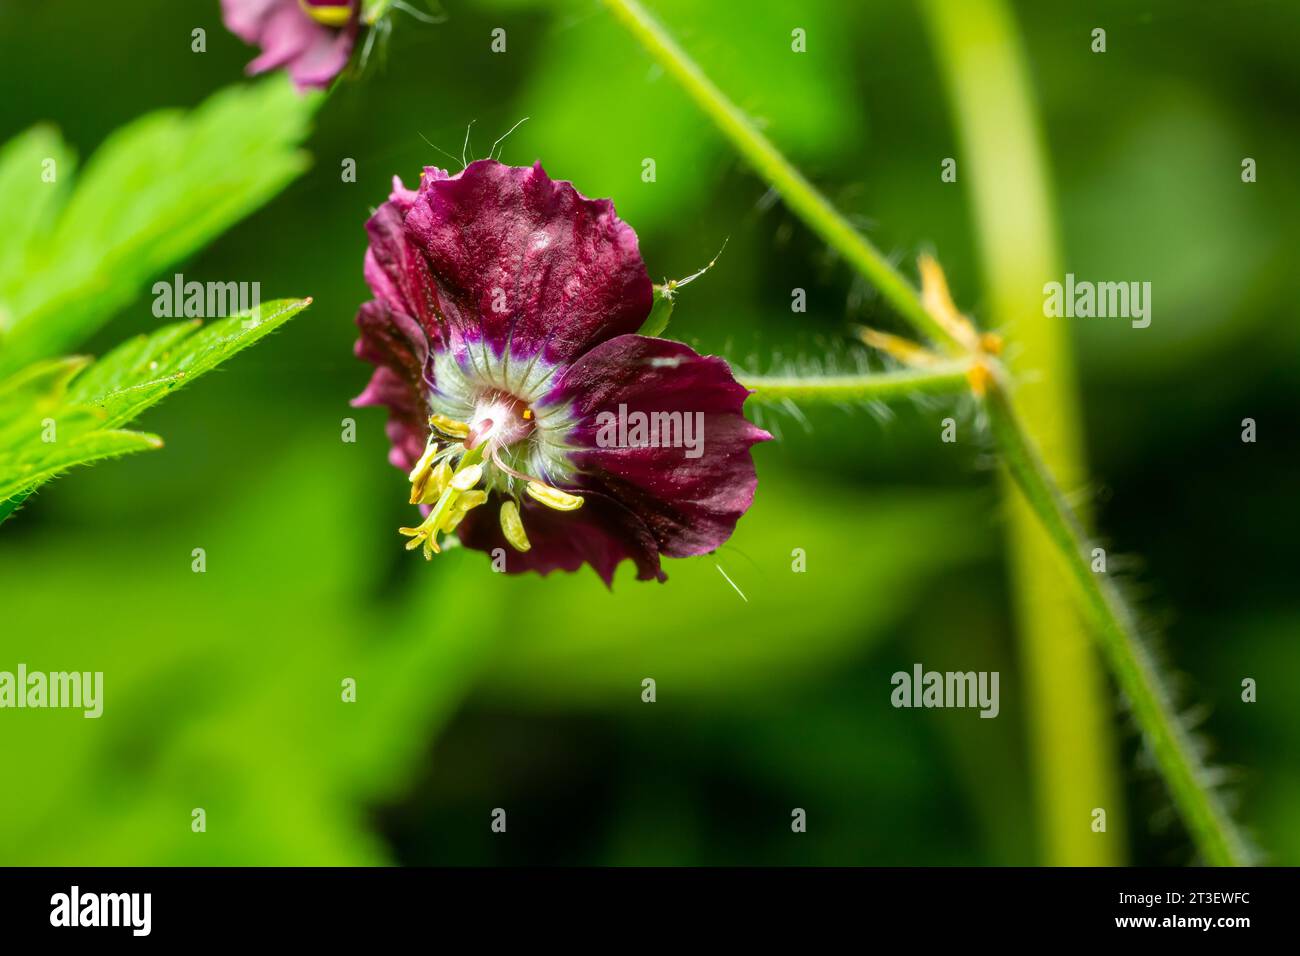 Dark purple dusky flowers in the garden, selective focus with green bokeh background - Geranium faeum. Stock Photo